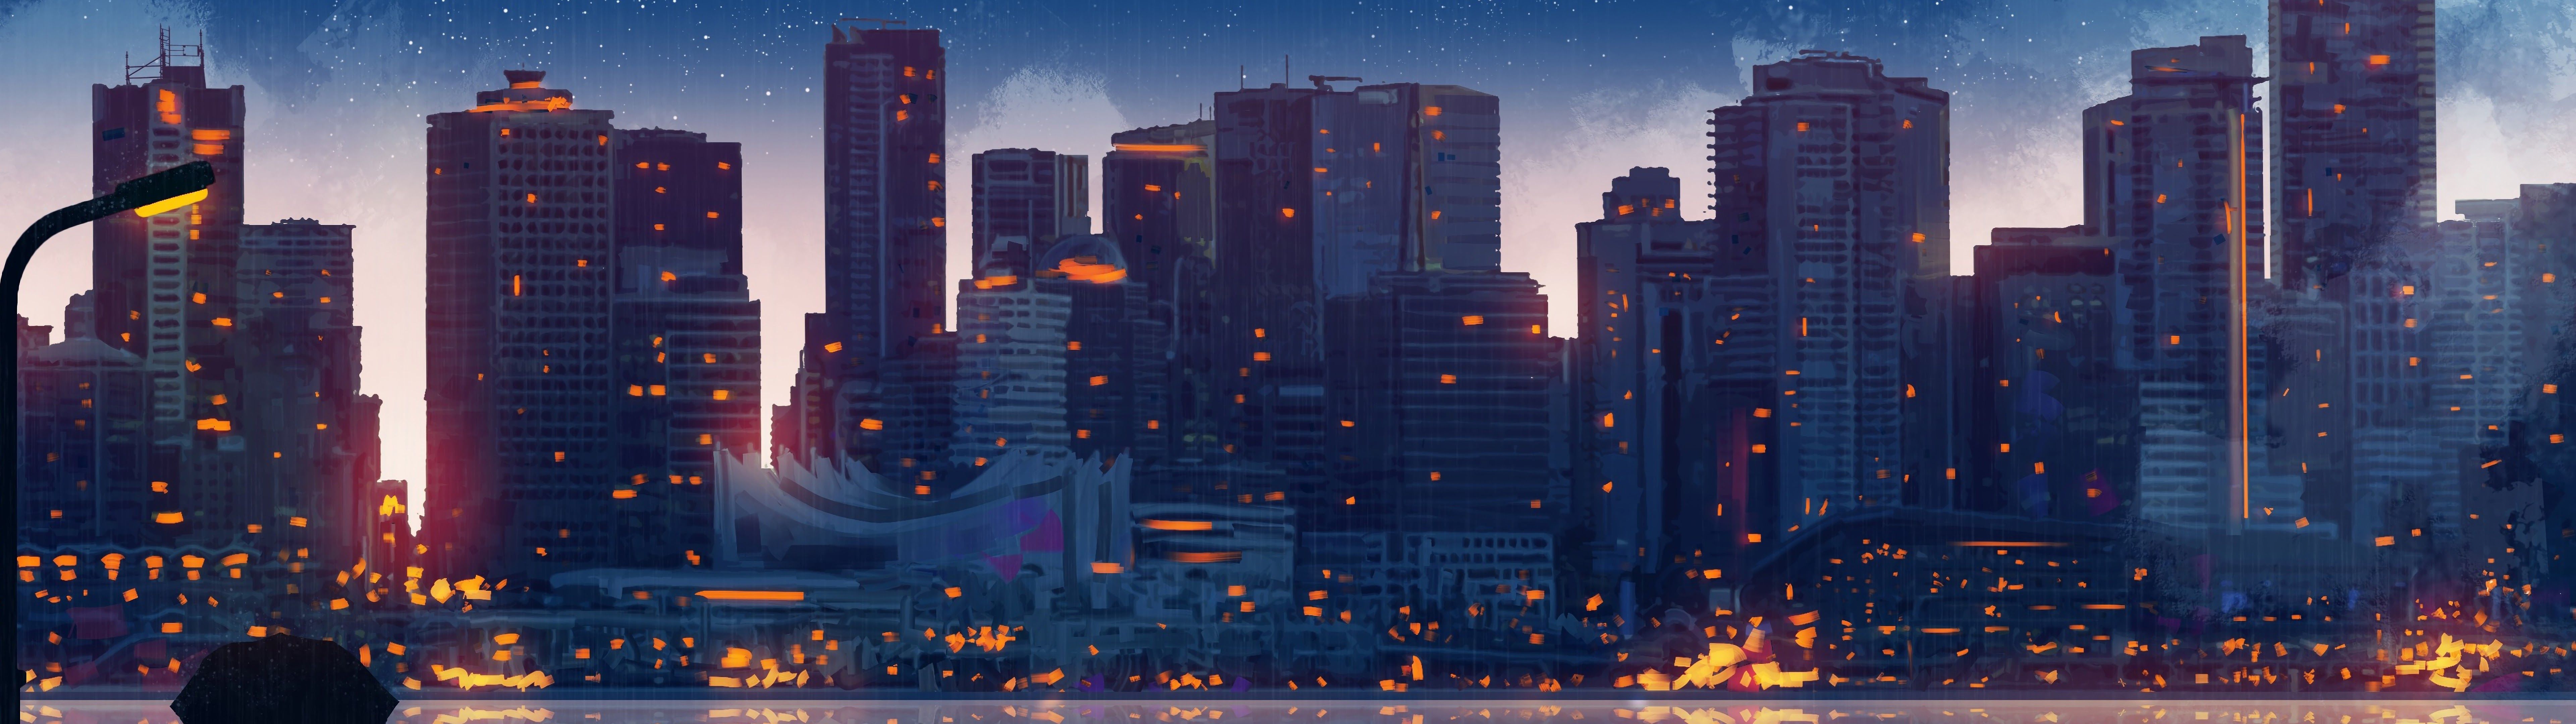 Anime Scenery City Buildings Silhouette 8K Wallpaper